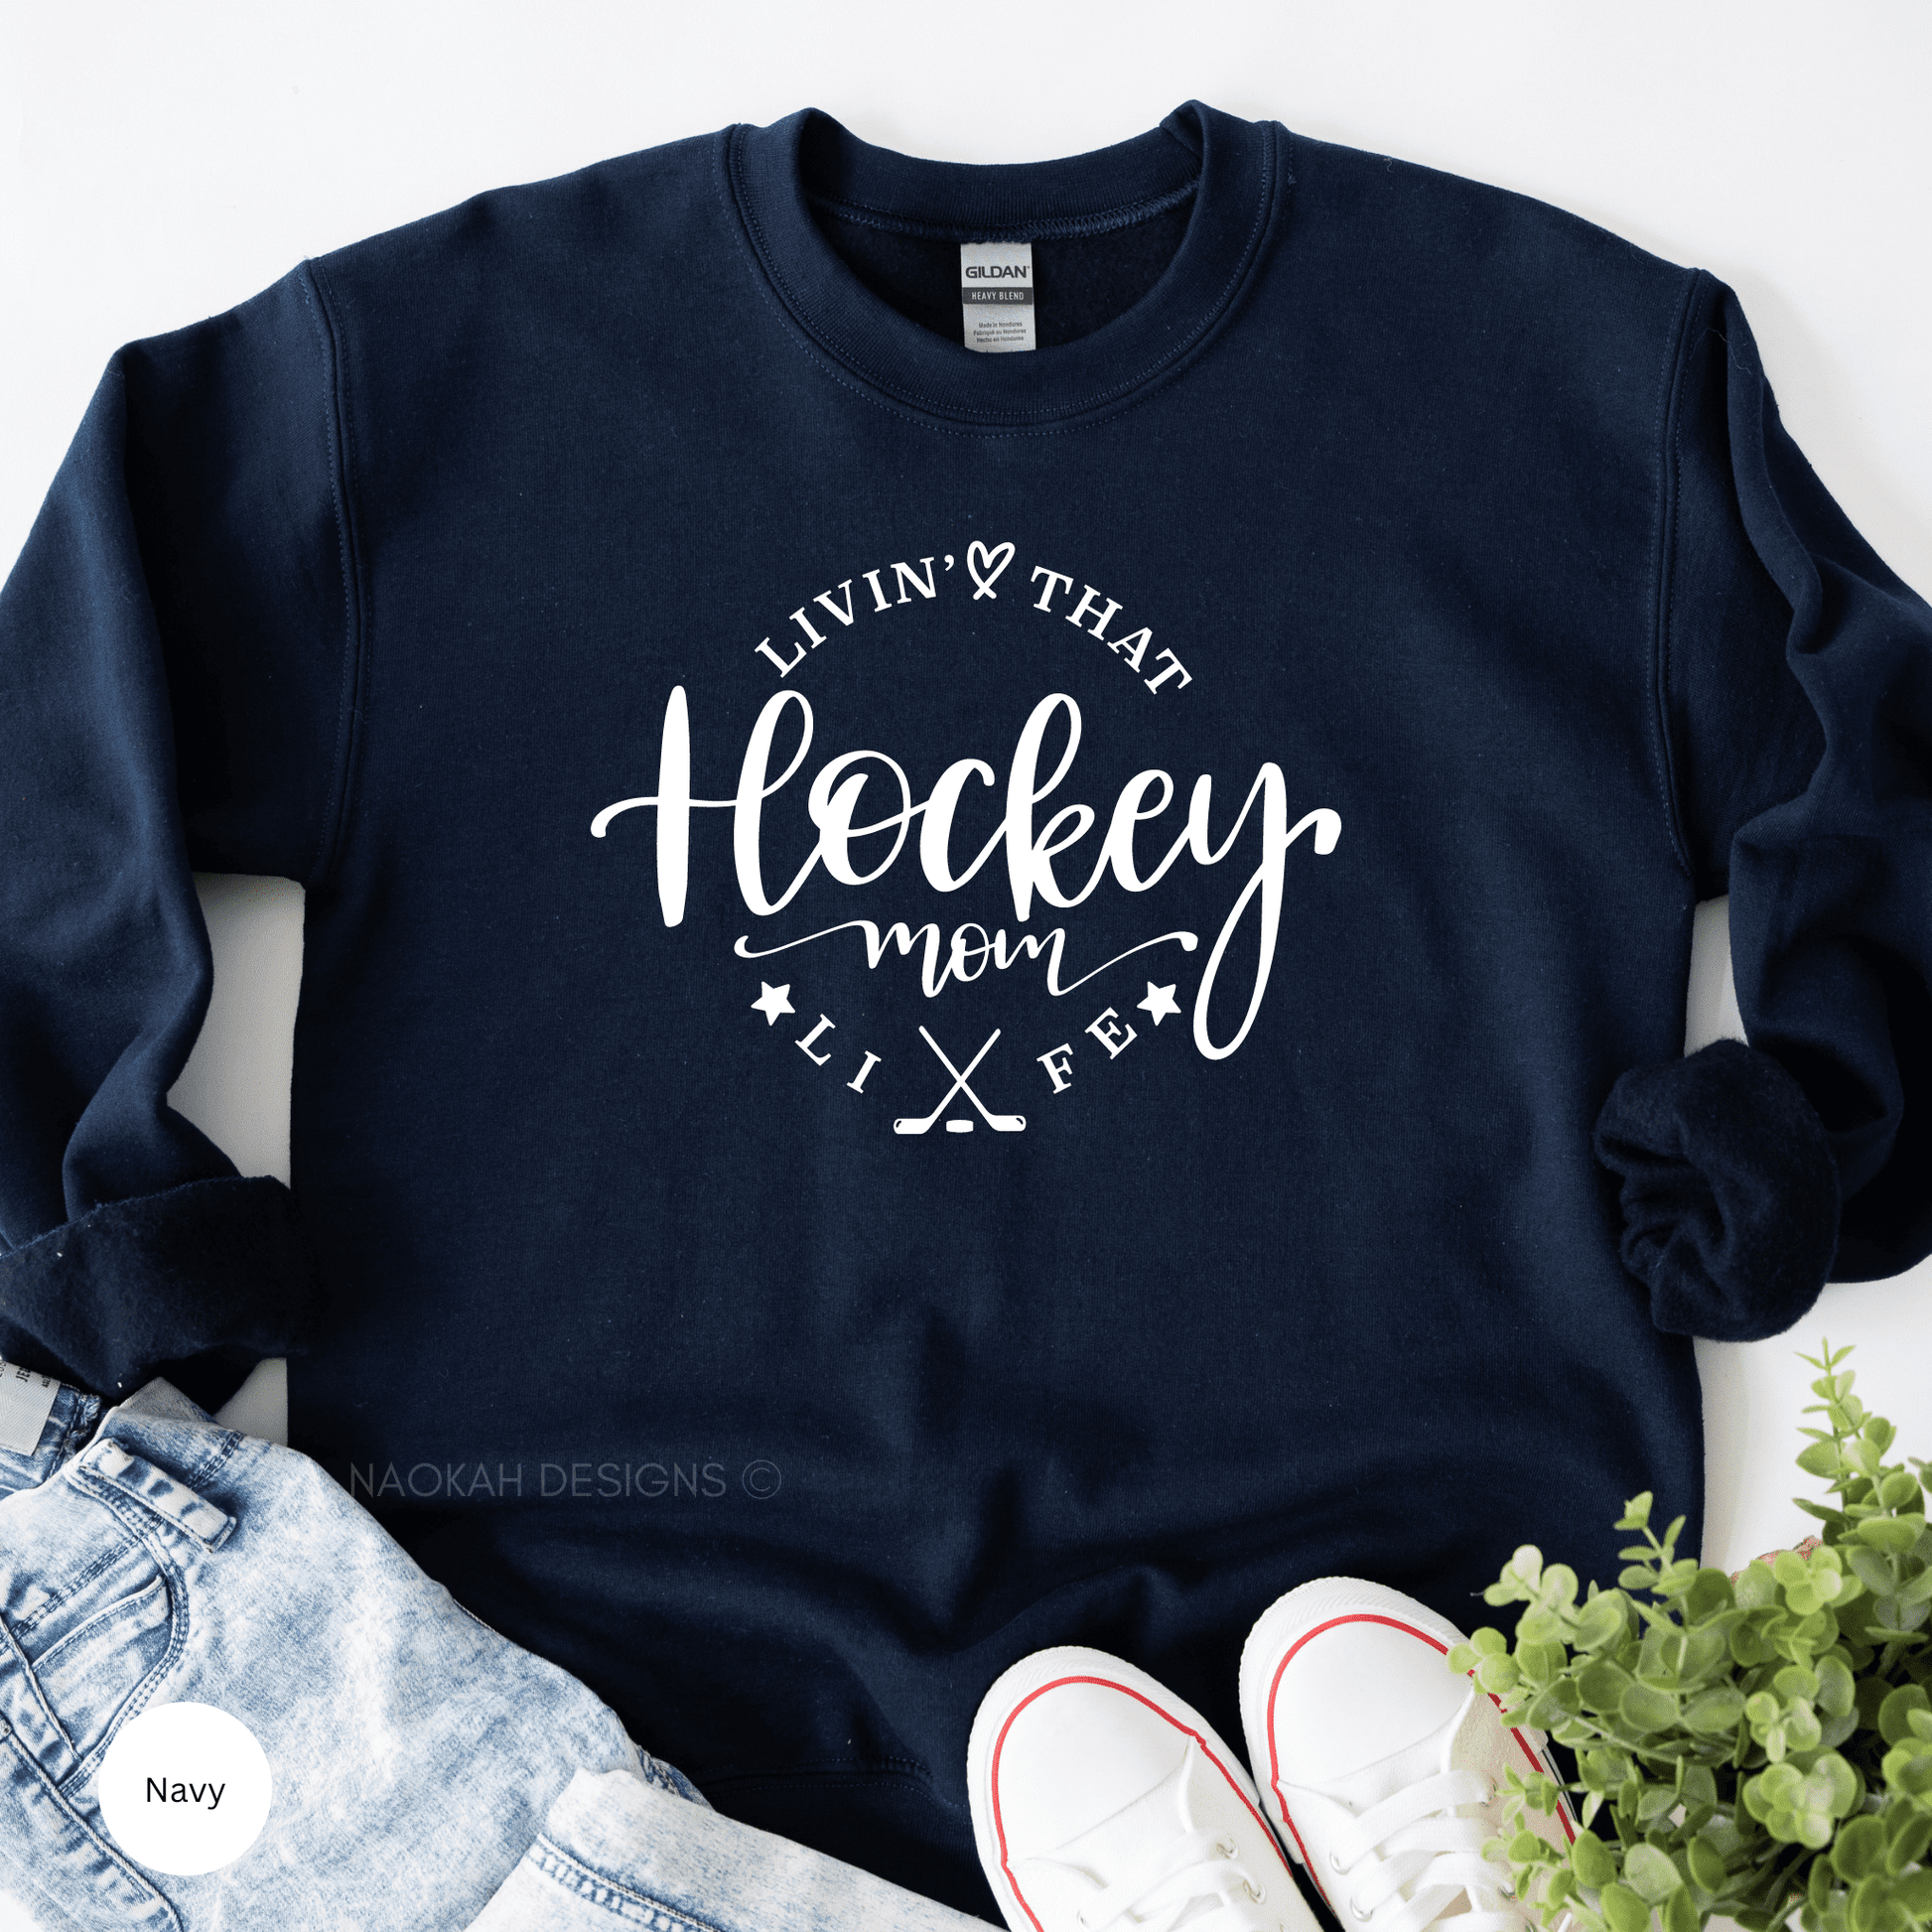 Livin' That Hockey Mom Life Sweater, hockey mom sweater, hockey mom hat, hockey sweatshirt, hockey mom gift, hockey mom shirt